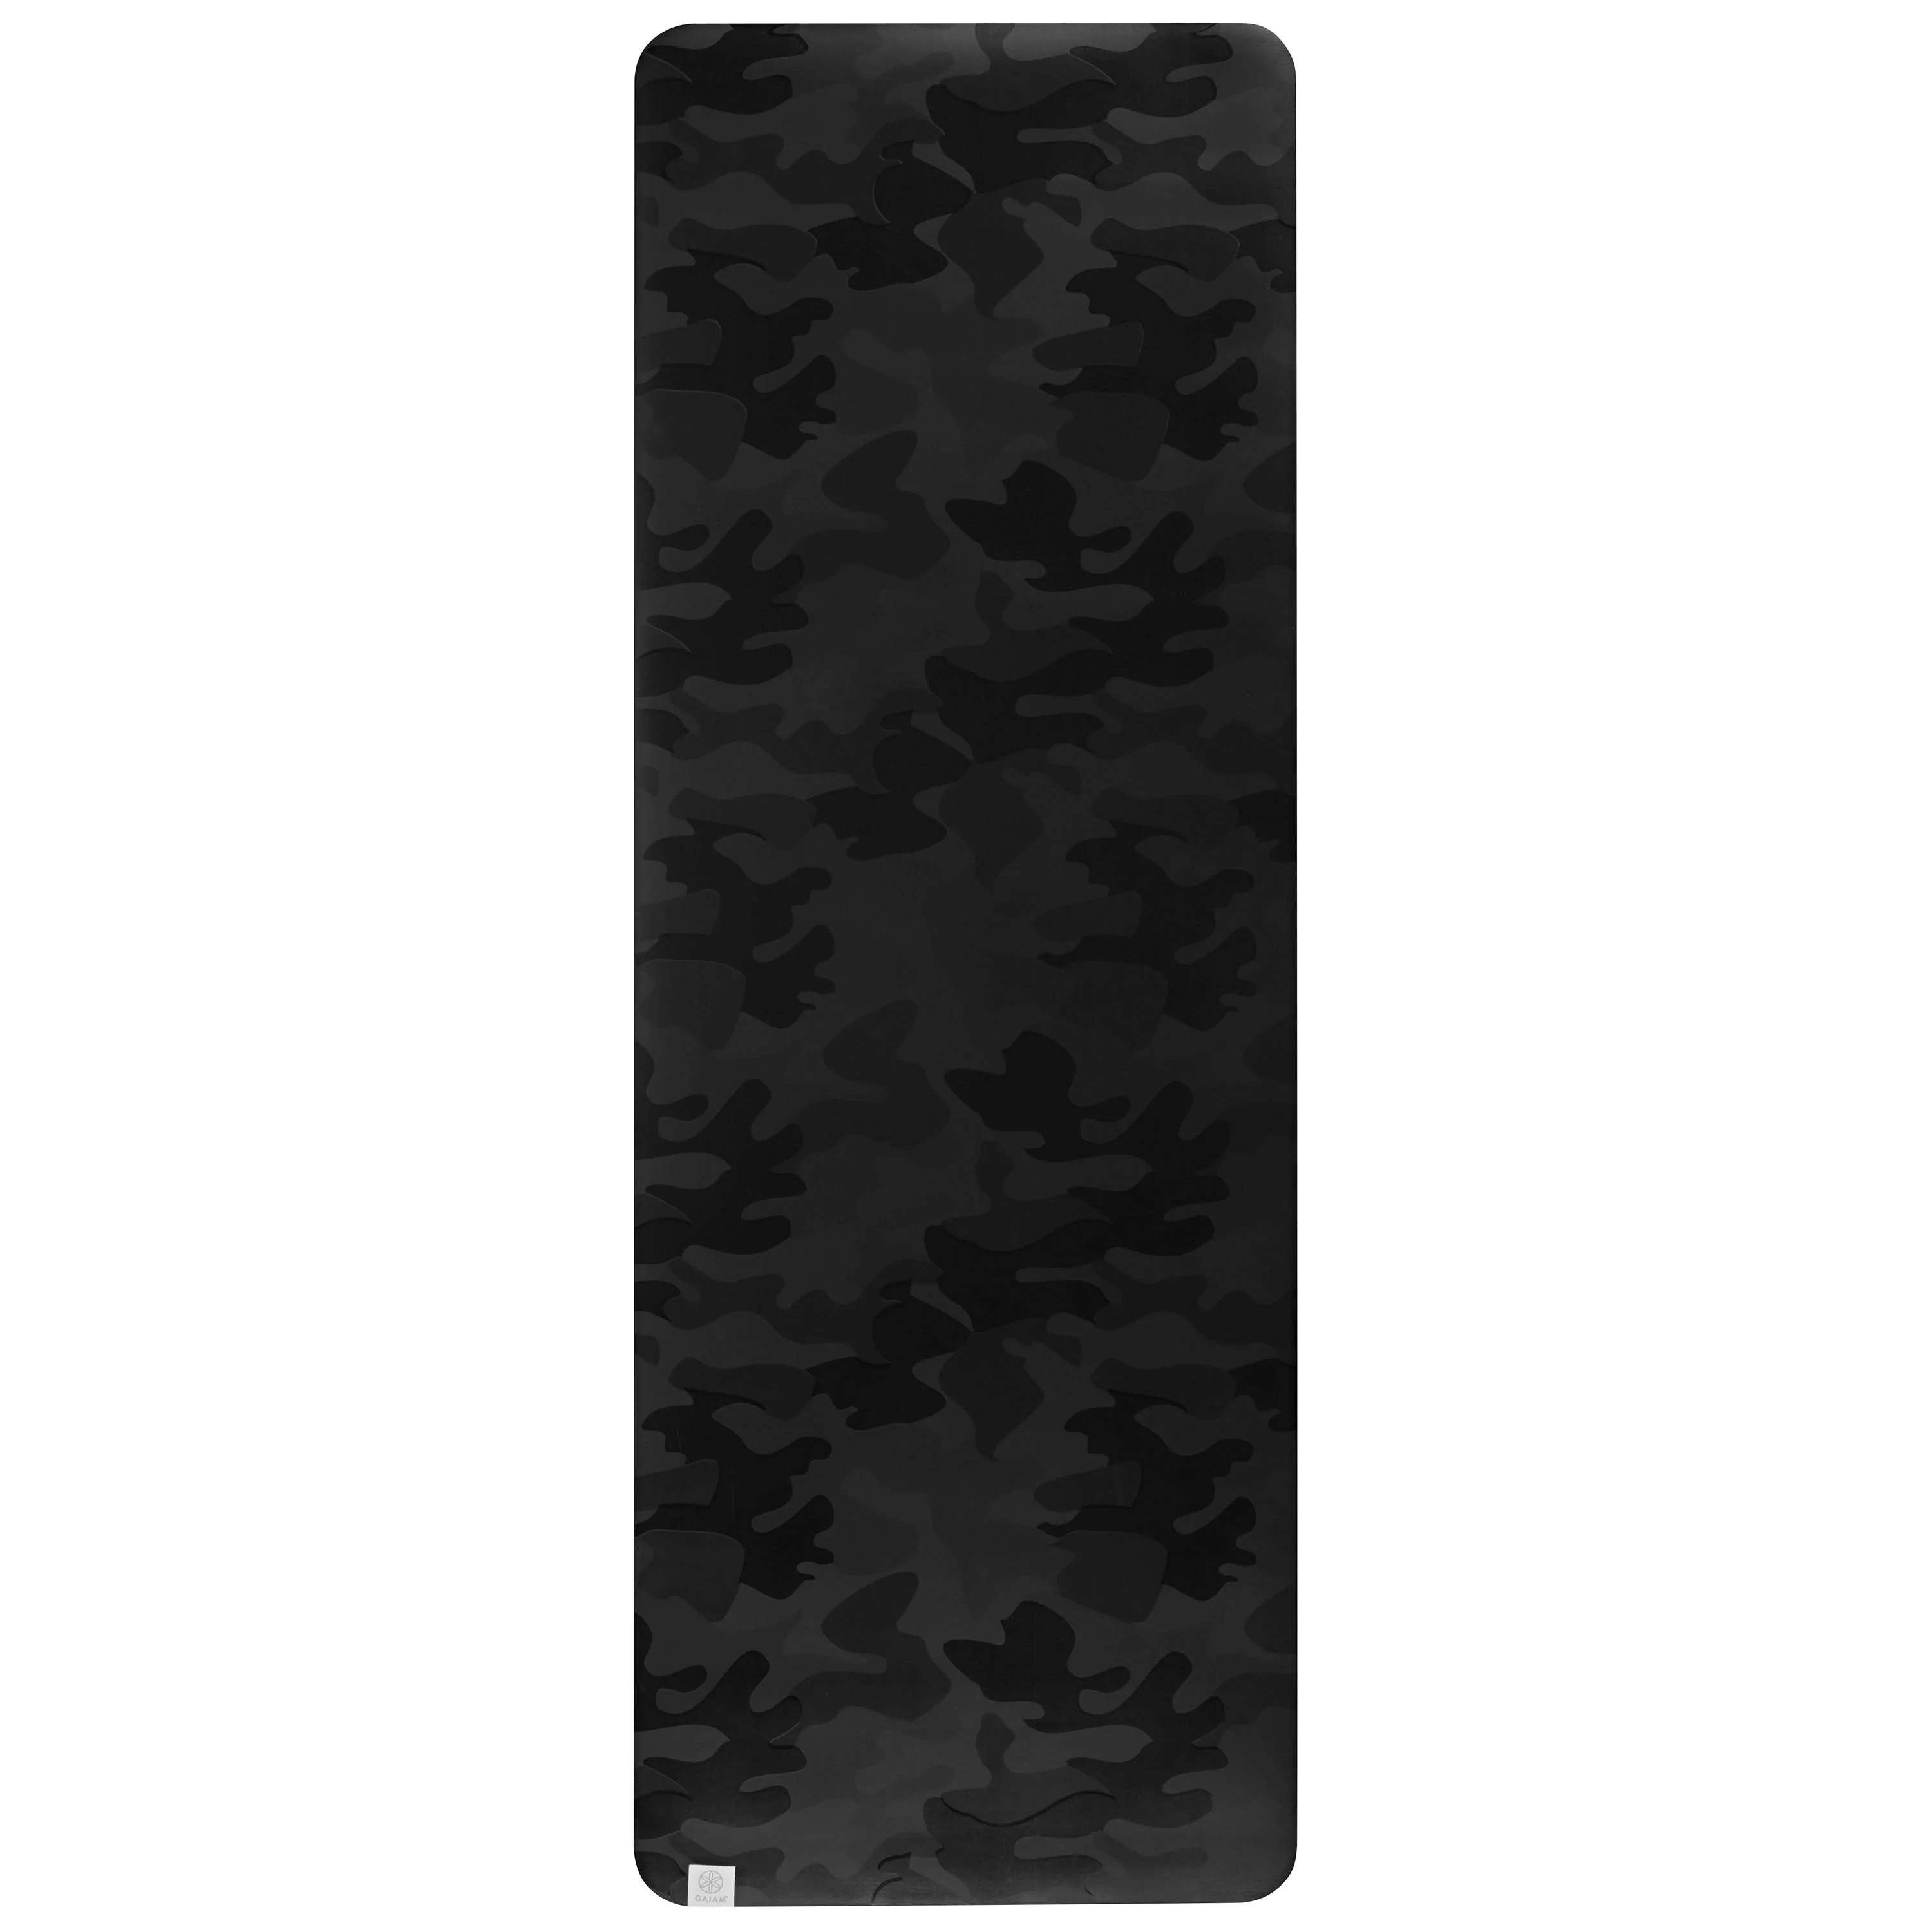 Camo Performance Dry-Grip Yoga Mat (5mm) top flat